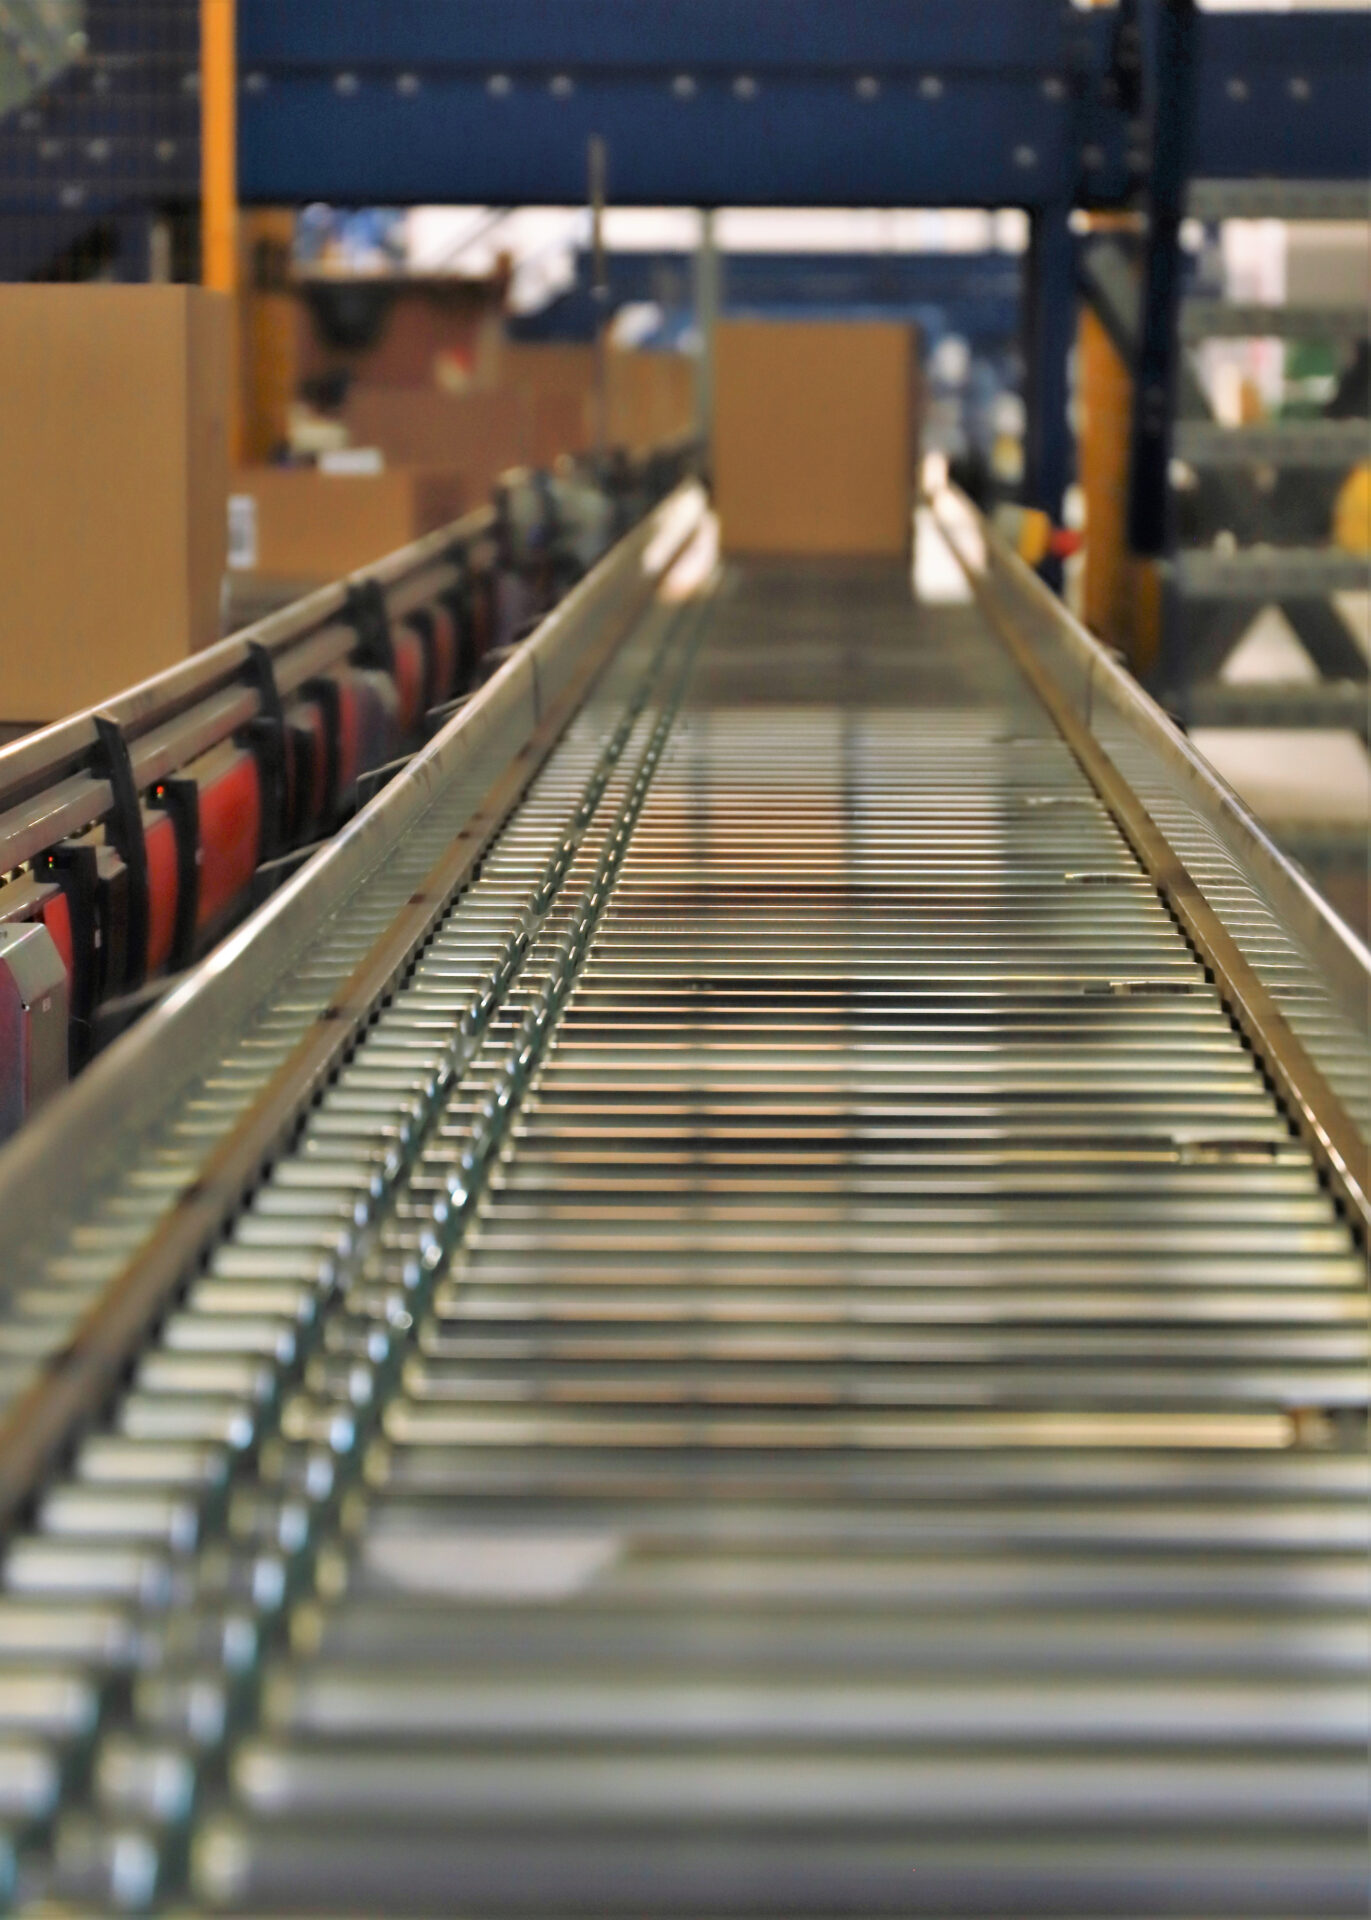 conveyor-belts-inside-a-logistics-warehouse-ecom-2023-11-27-05-12-15-utc